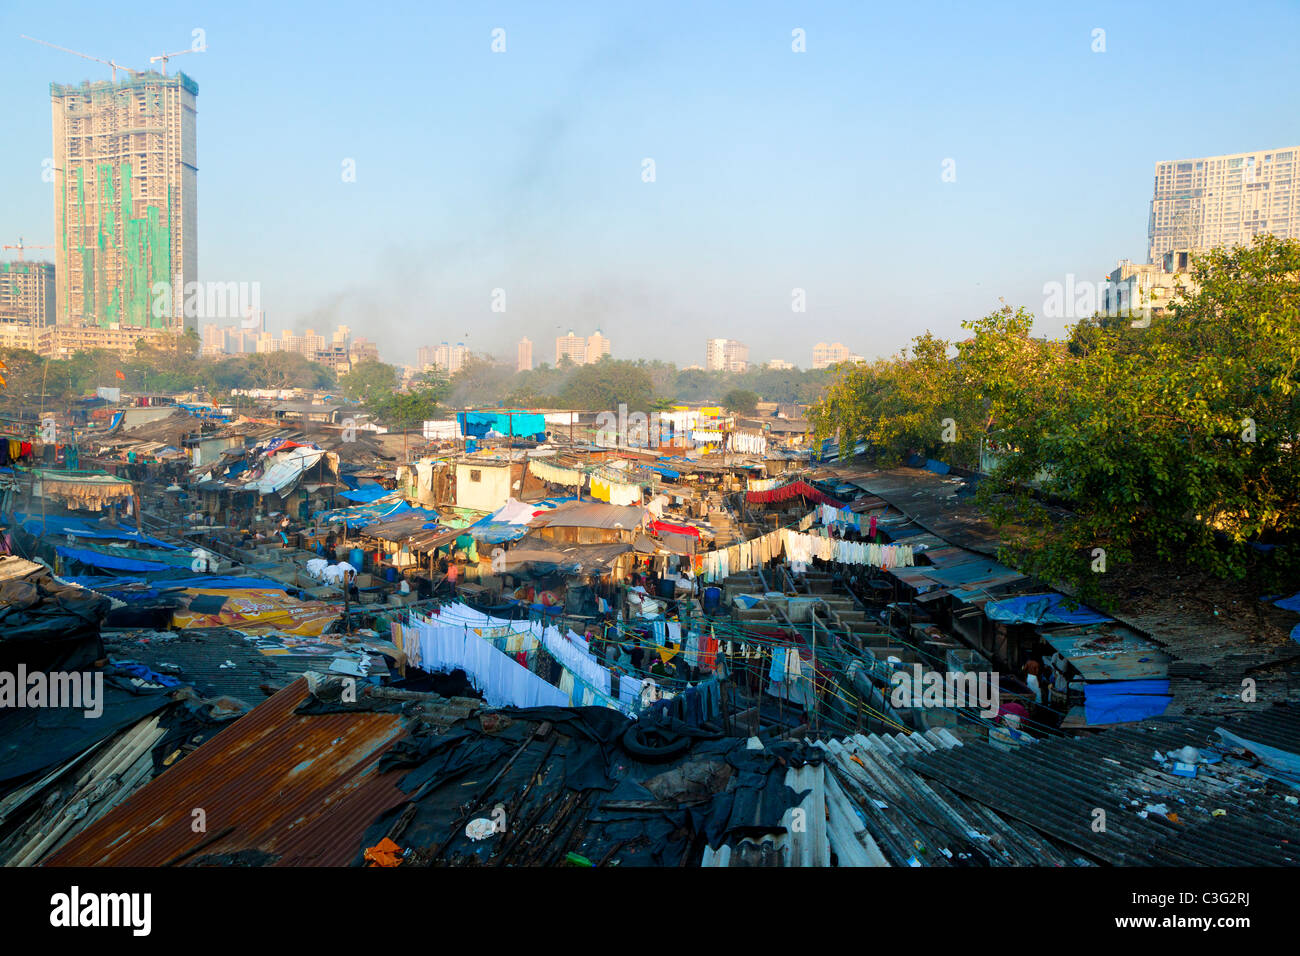 City slum rooftops in large city Stock Photo